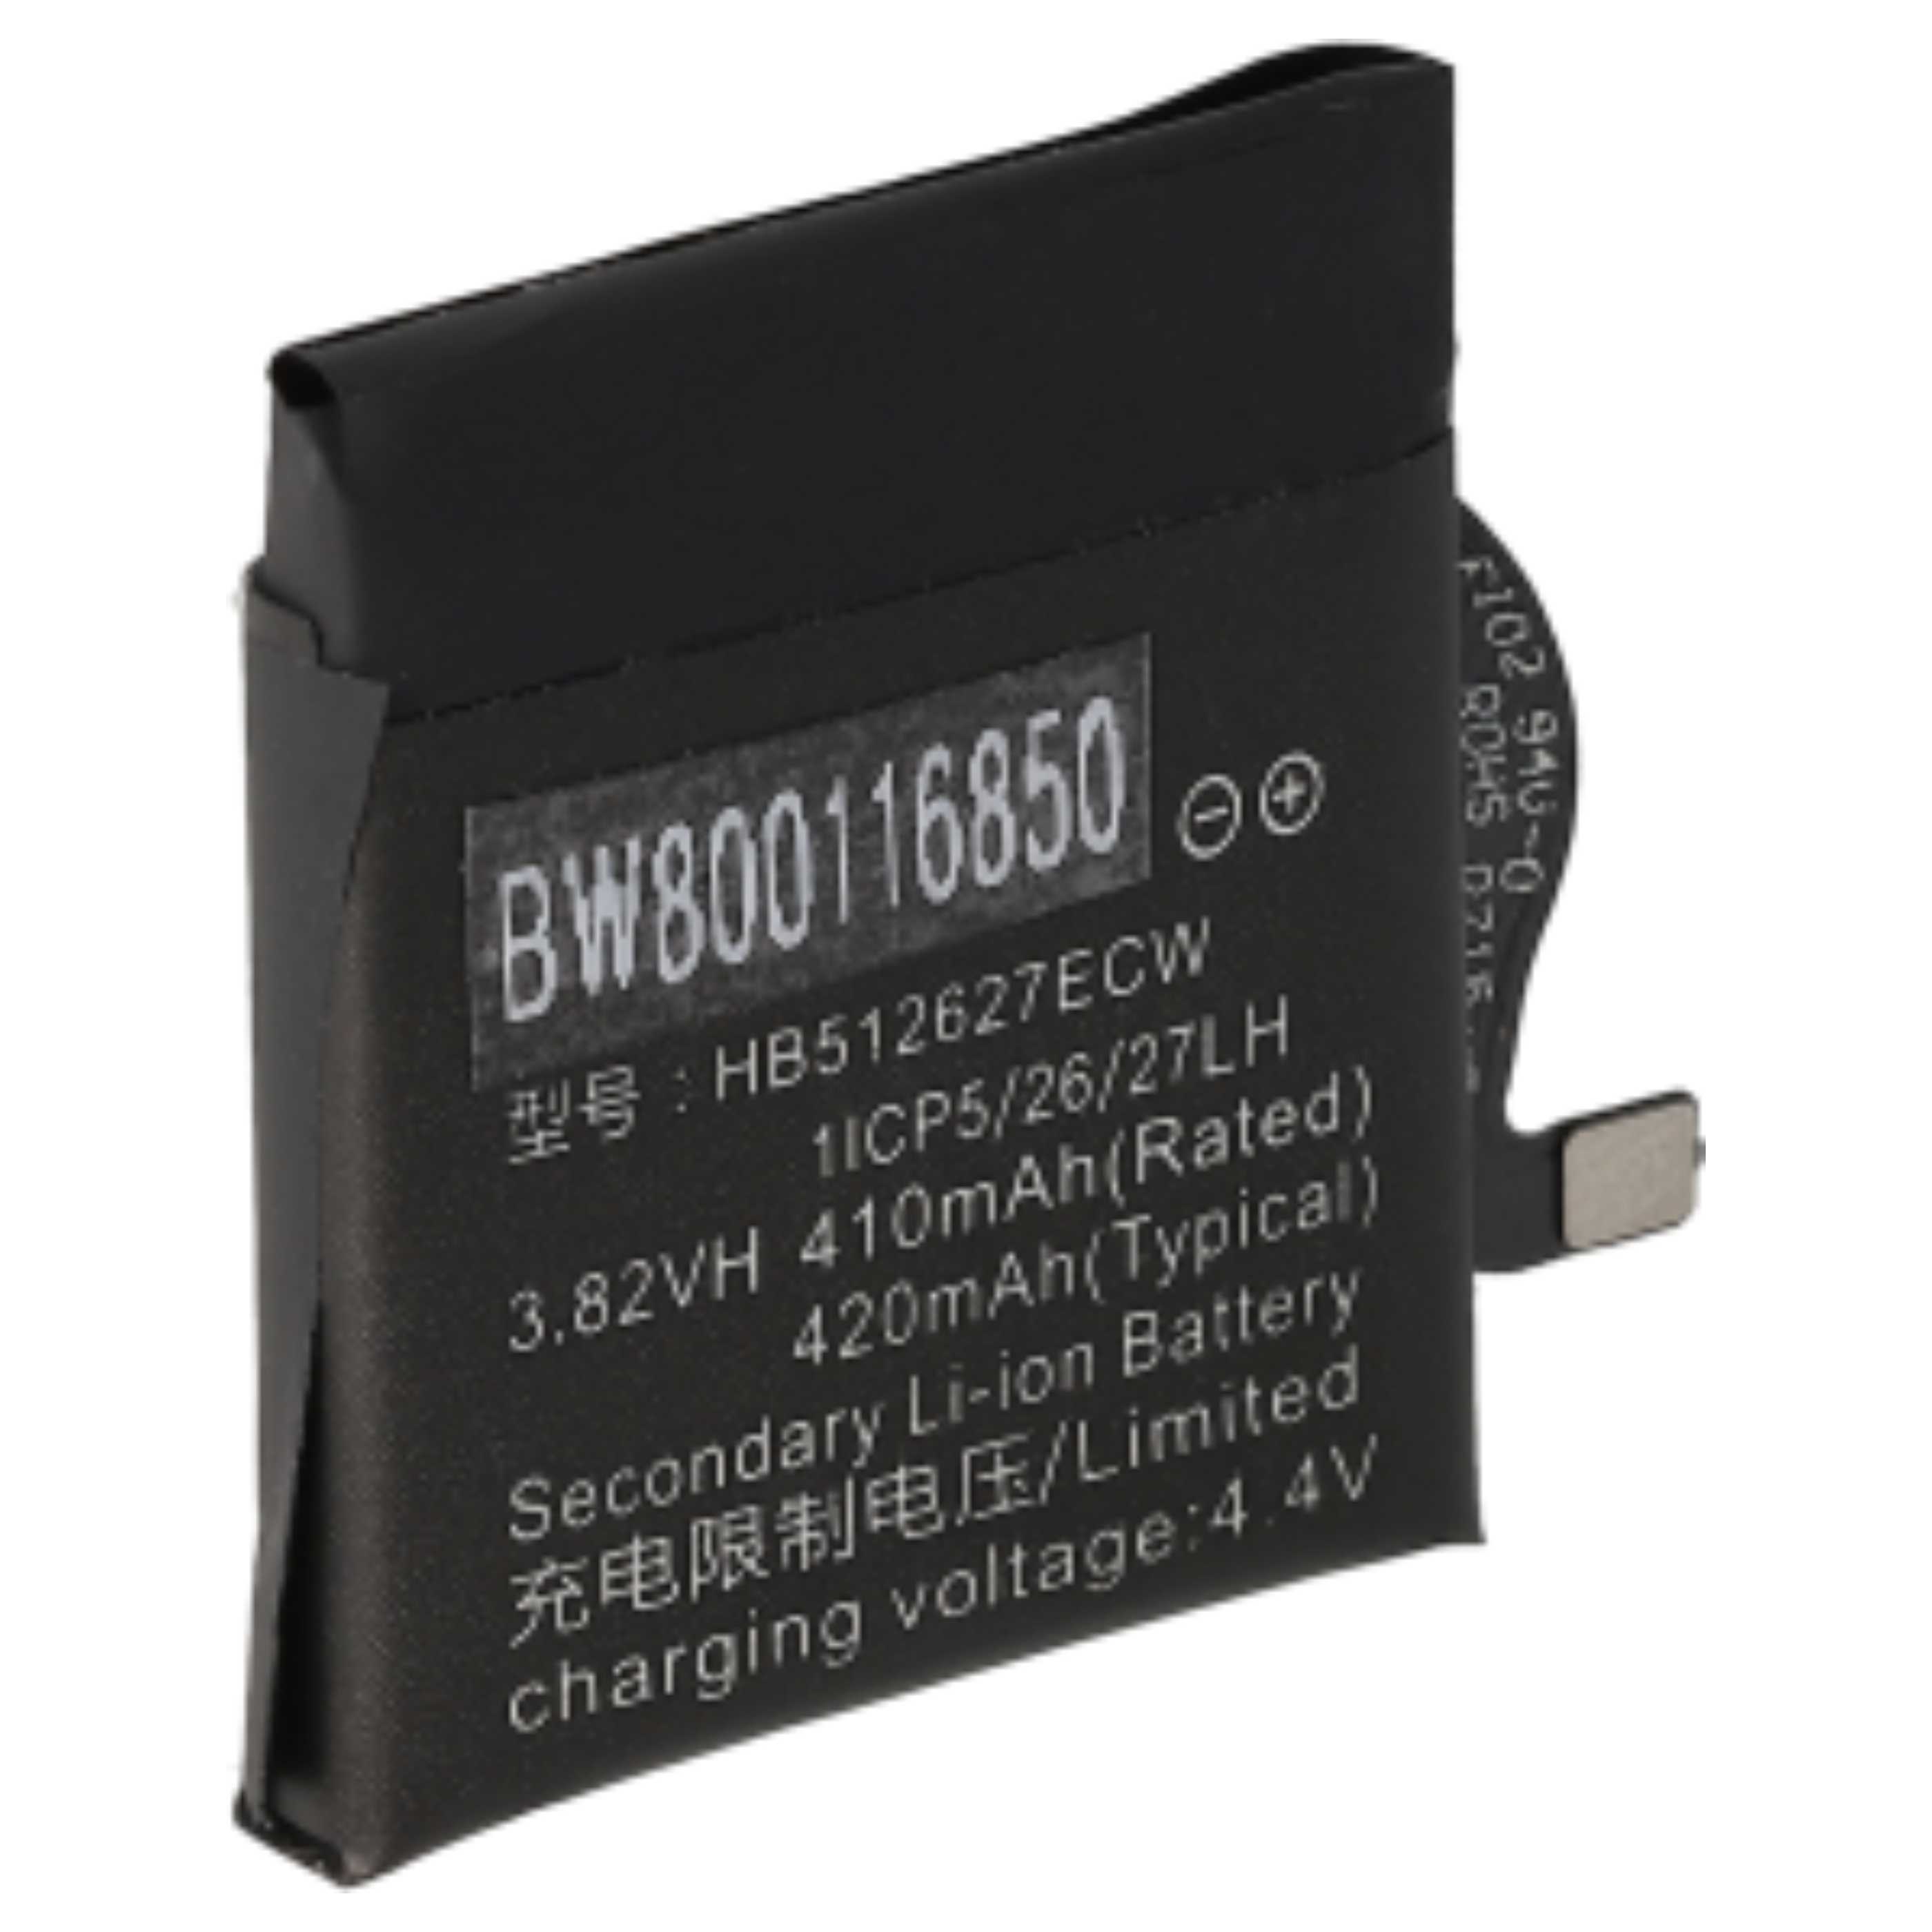 Smartwatch Battery Replacement for Huawei HB512627ECW - 410 mAh 3.8 V Li-polymer